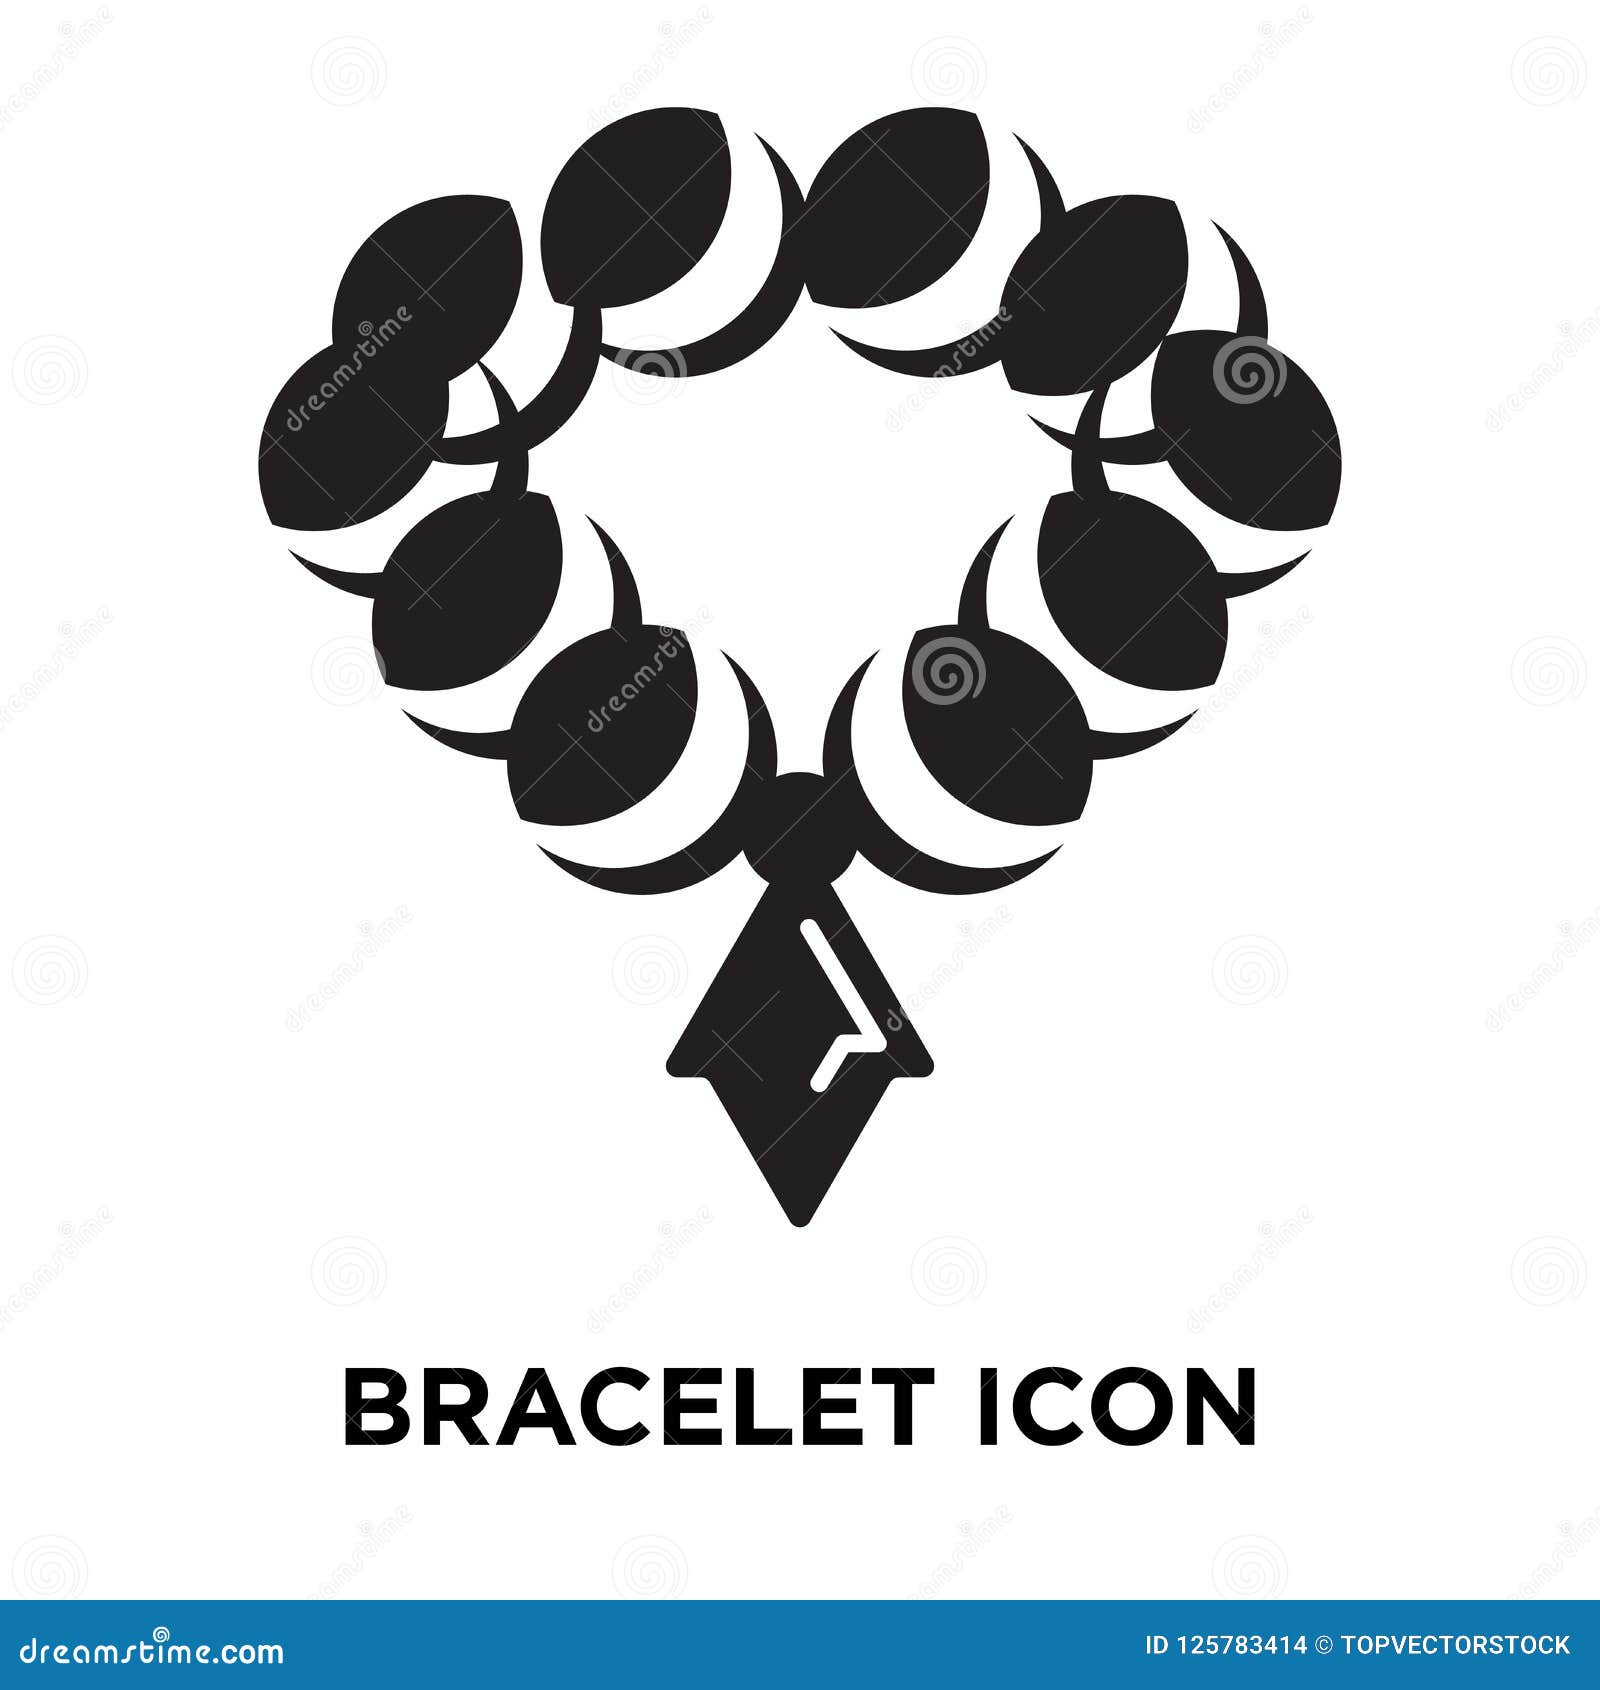 bracelet-icon-vector-isolated-on-white-background-logo-concept-stock